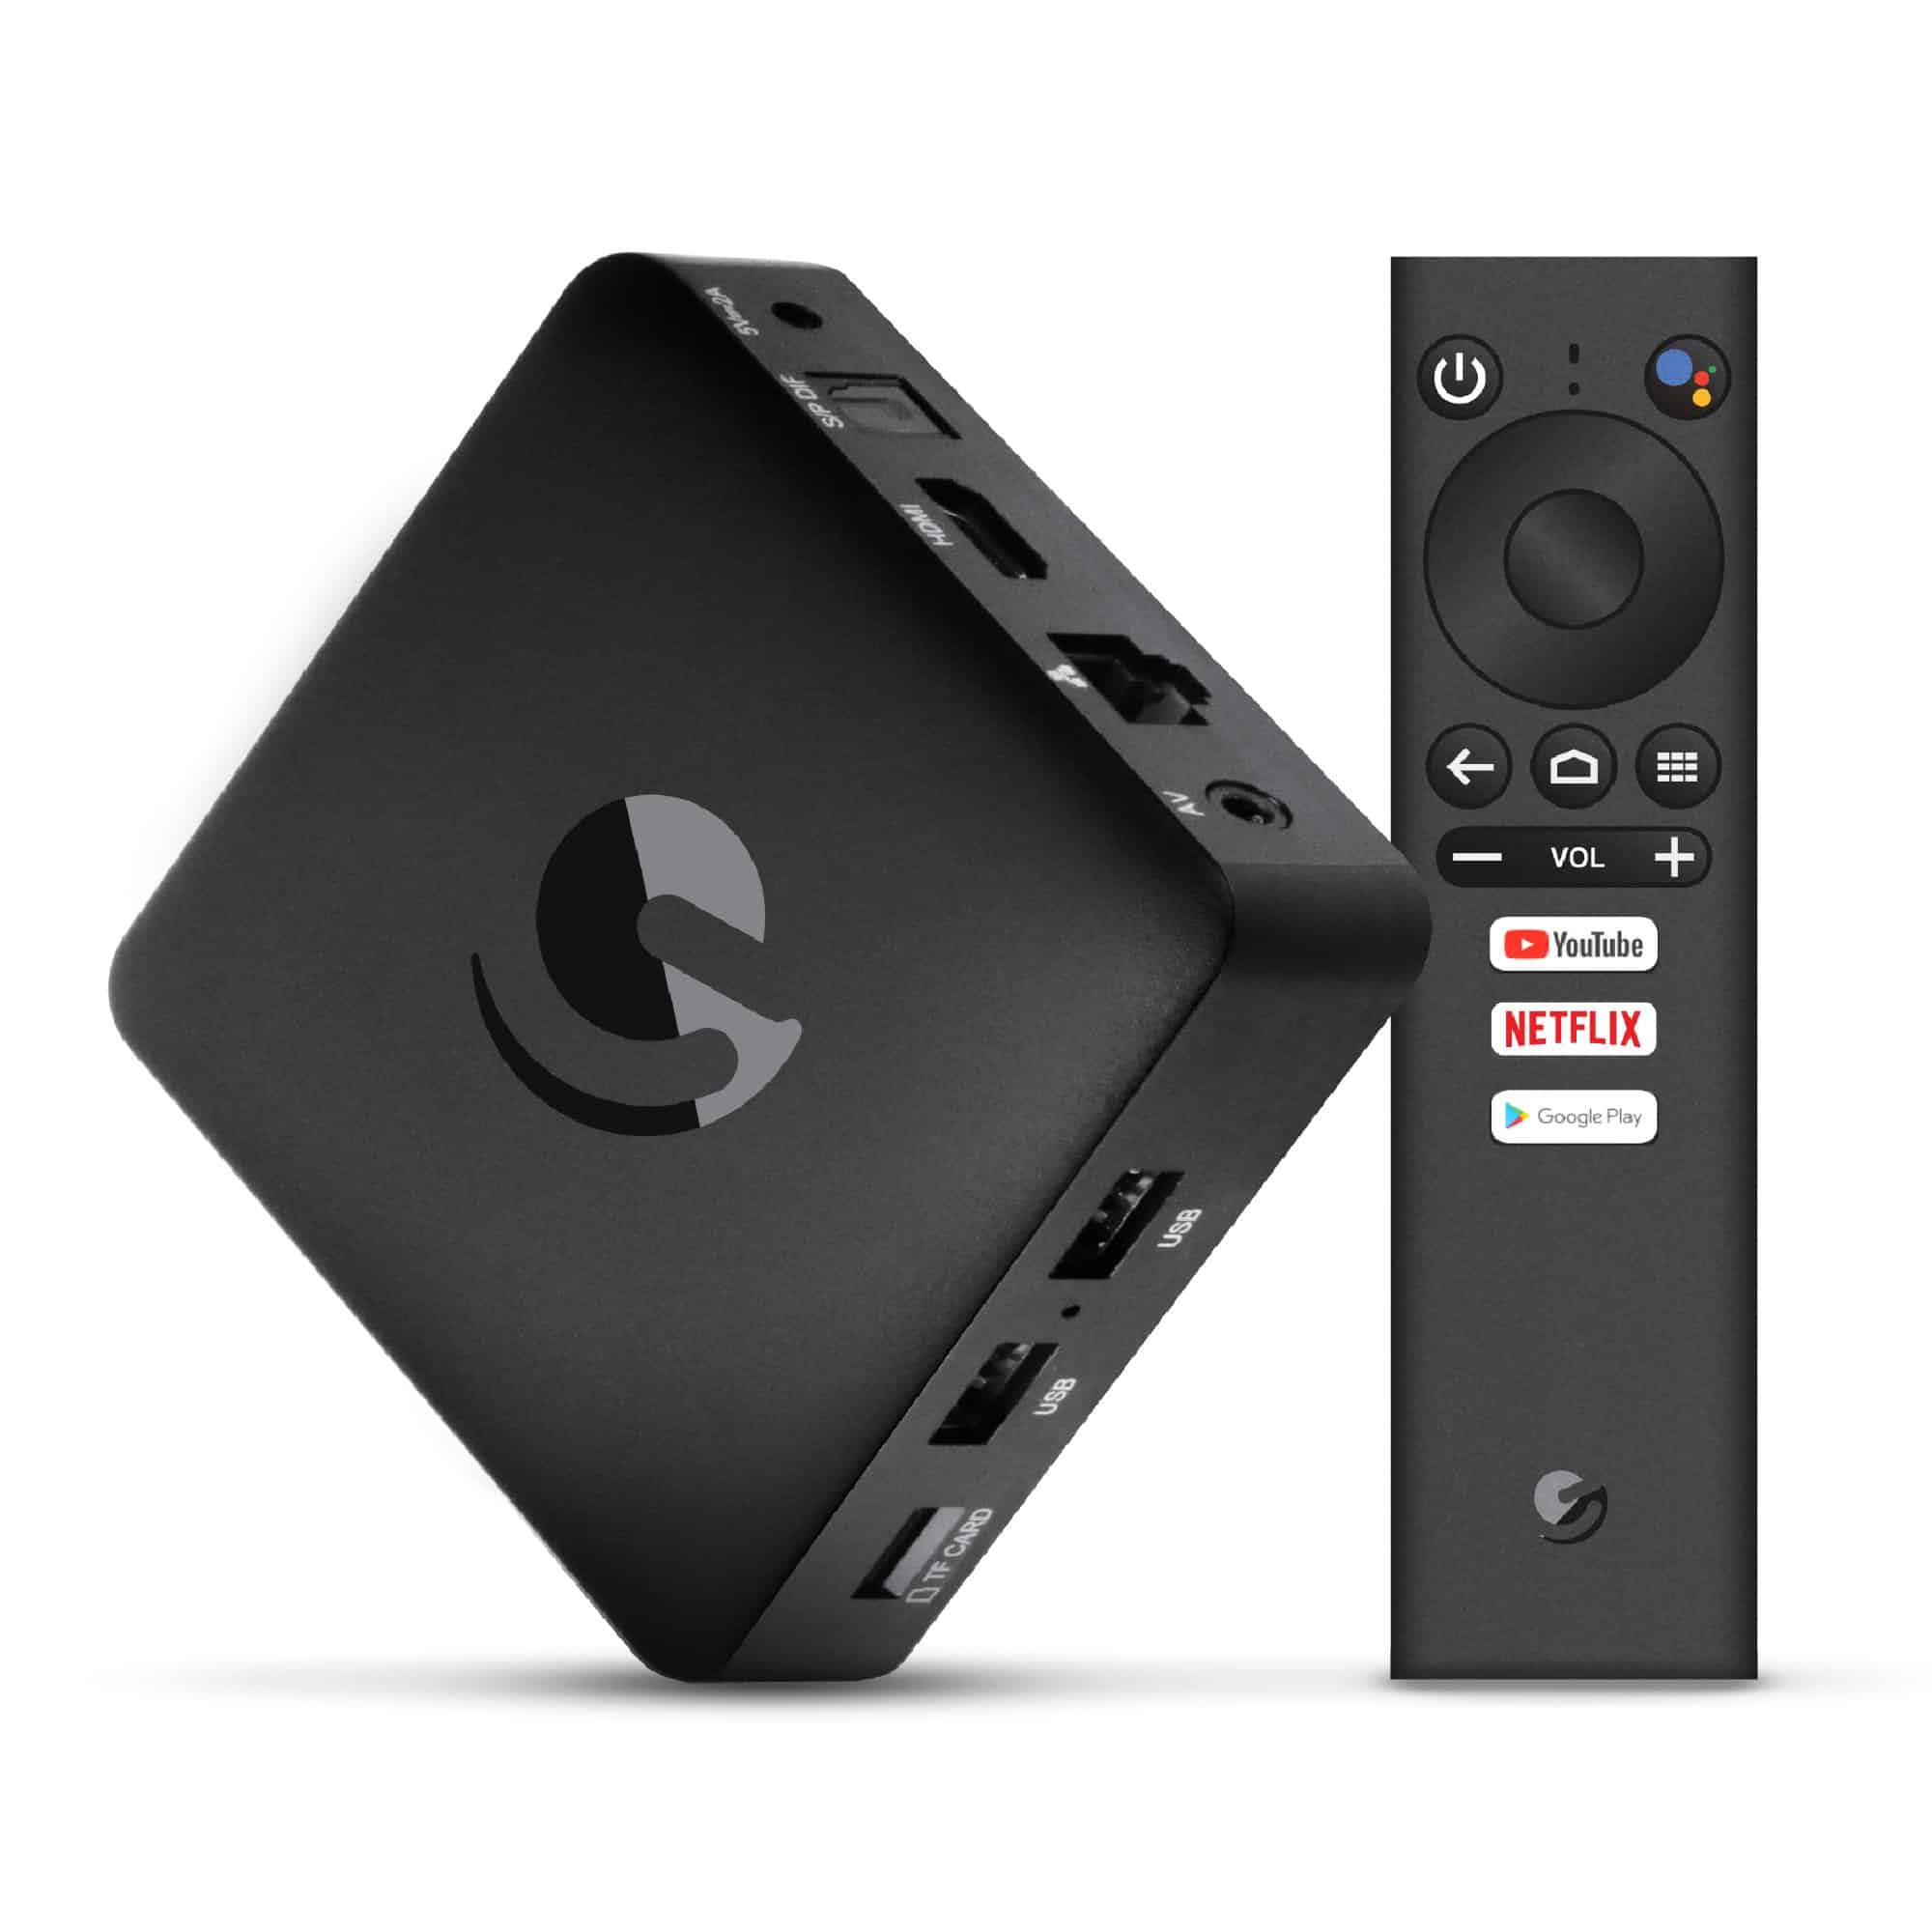 Ematic Jetstream 4K Ultra HD TV Box